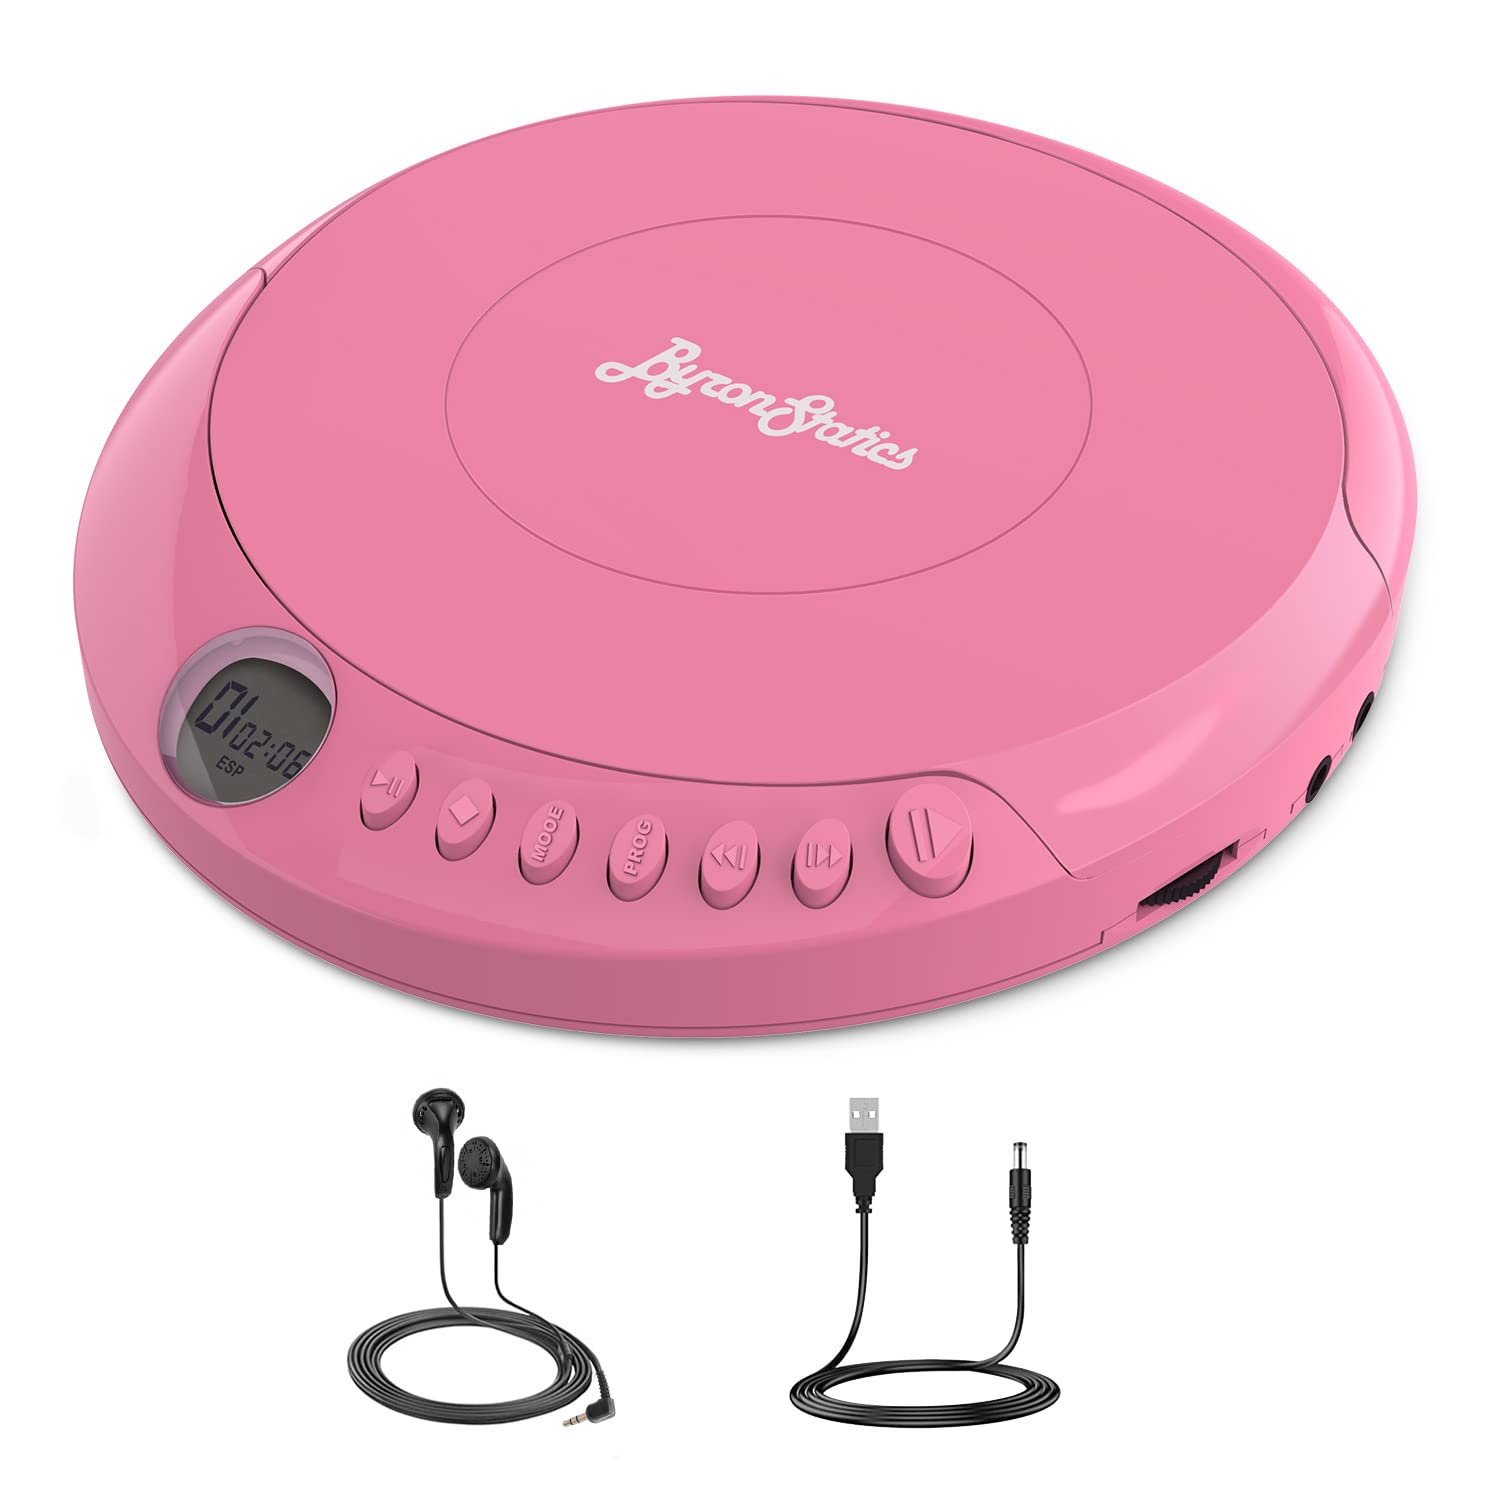 ByronStatics Portable Disc CD player, Personal Walkman Music Anti-Skip Shockproof Protection, Lightweight, Headphones Jack, Powered DC or 2XAA Battery - Pink